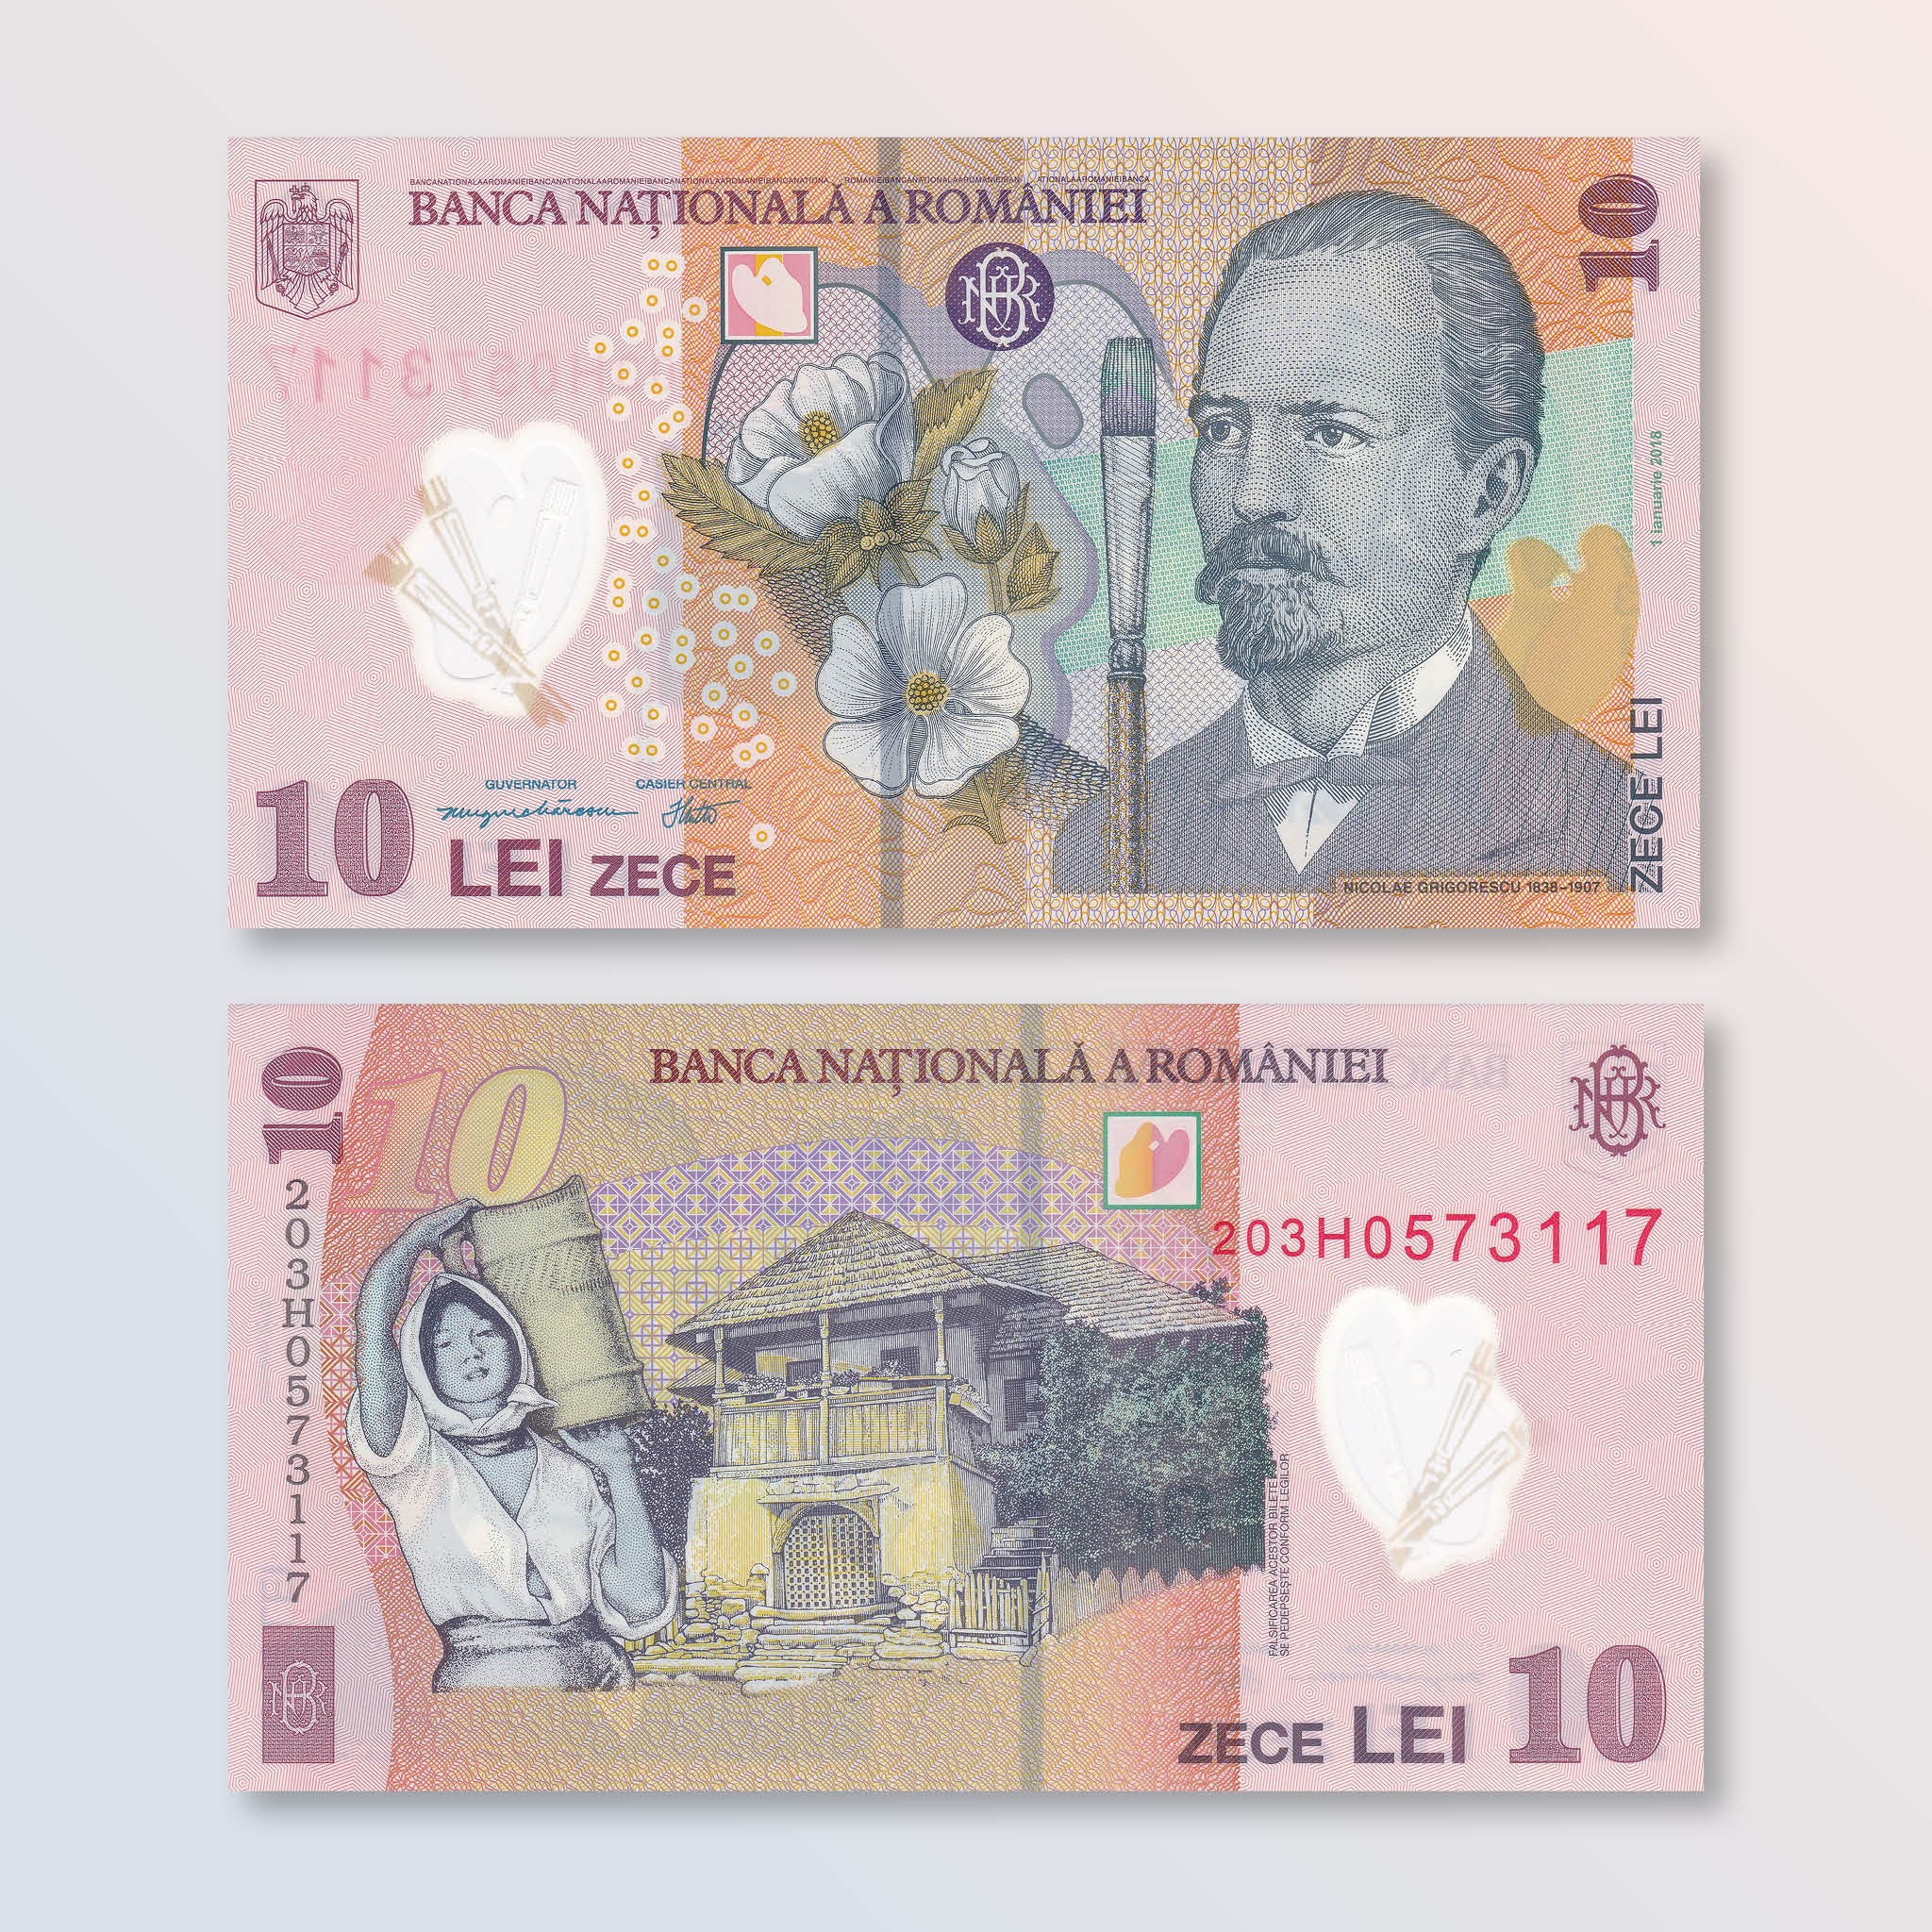 Romania 10 Lei, 2018 (2020), B288b, P119, UNC - Robert's World Money - World Banknotes